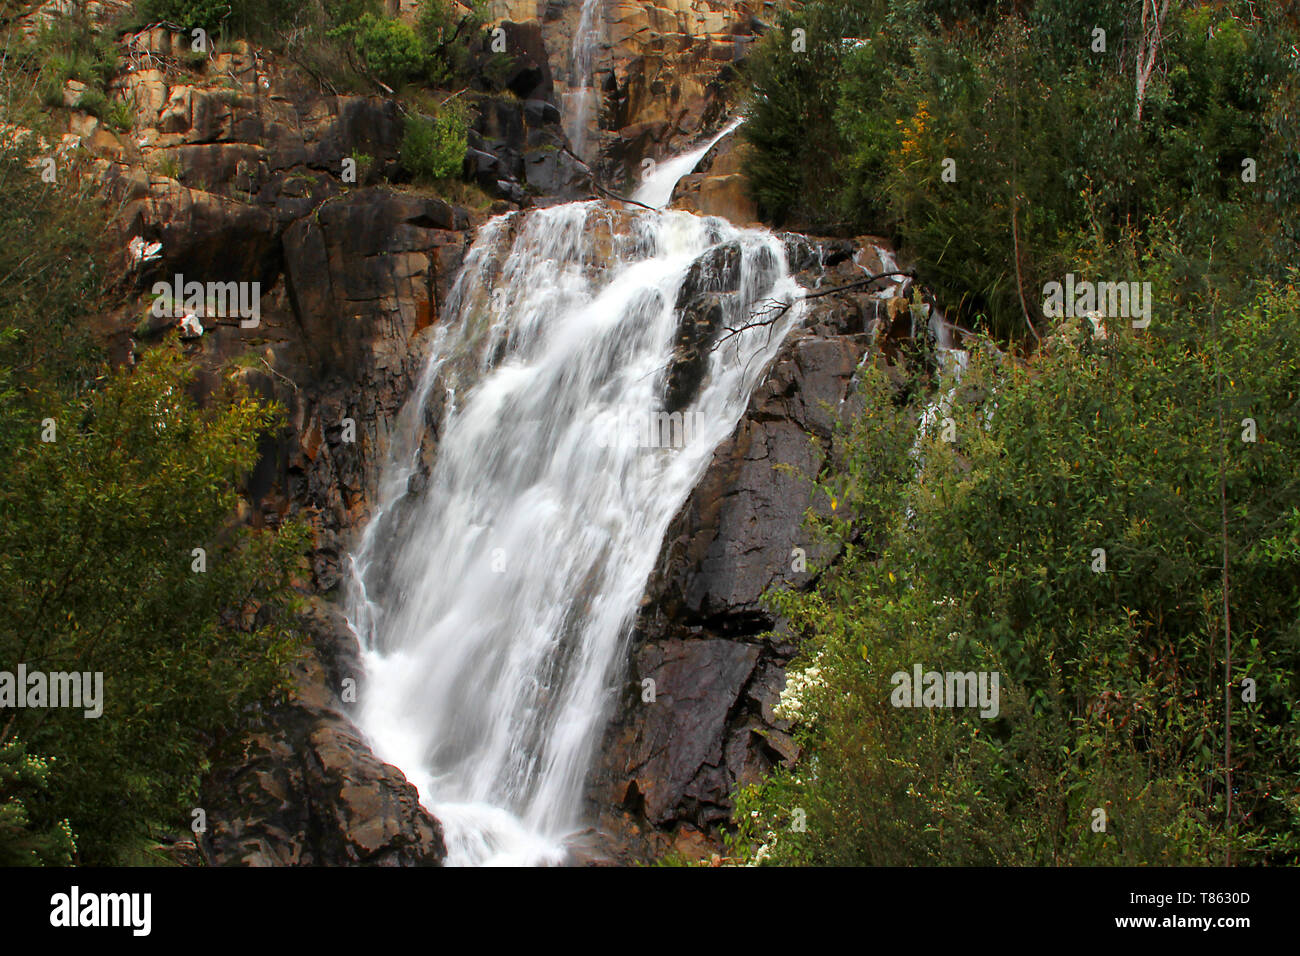 Steavenson Falls, a waterfall on the Steavenson River, is located 4 kilometres (2.5 mi) southeast of Marysville, Victoria, Australia. Stock Photo